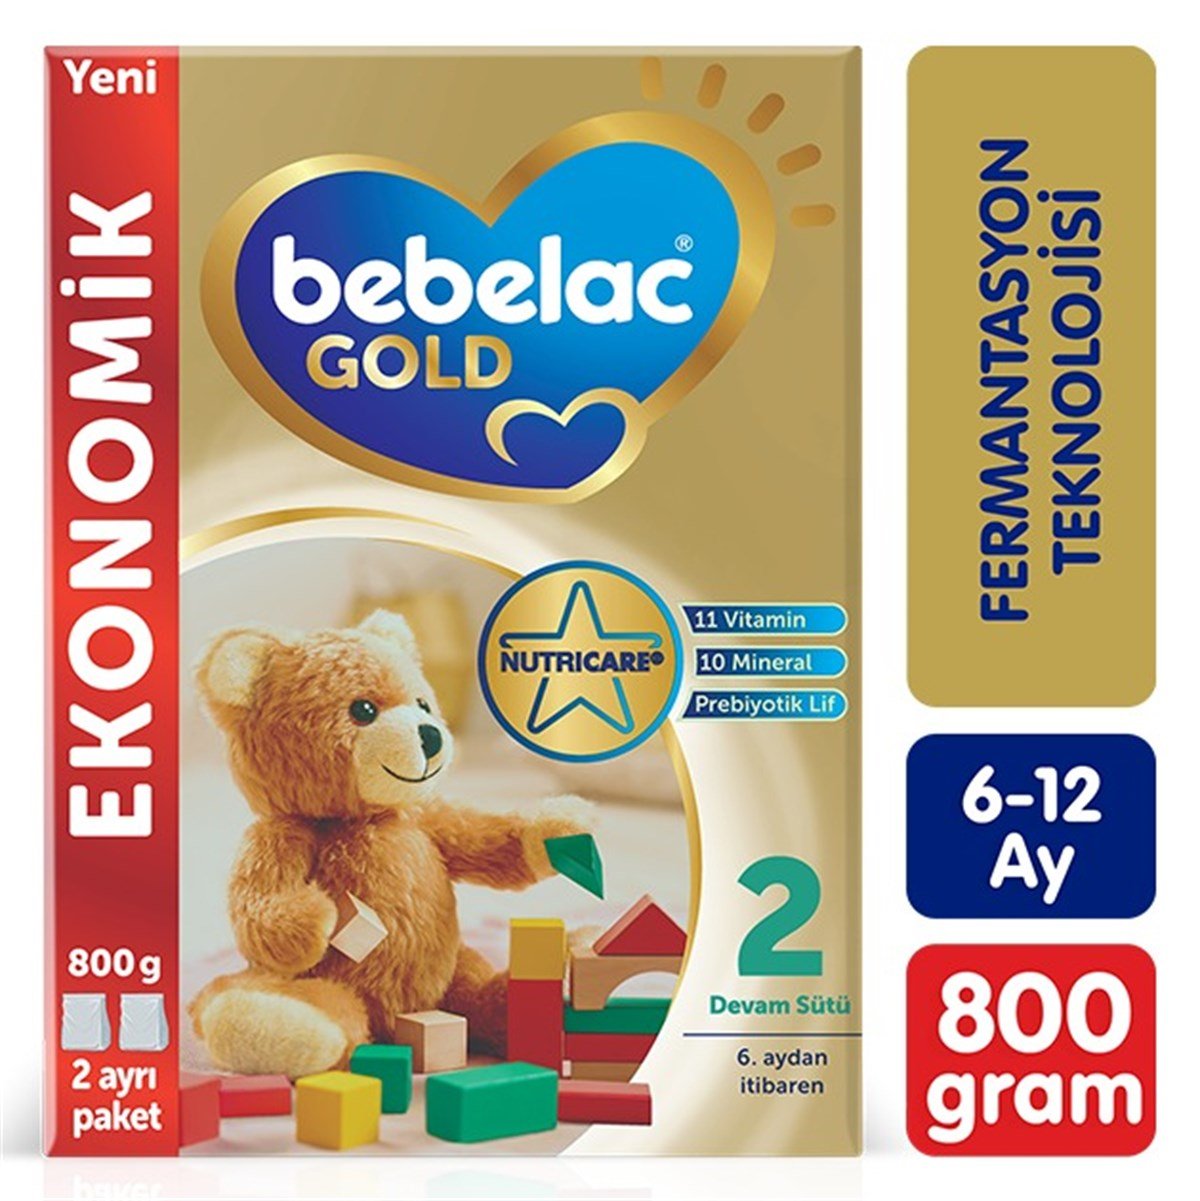 Bebelac Gold 2 Devam Sütü 800g 6-12 Ay - Minimoda